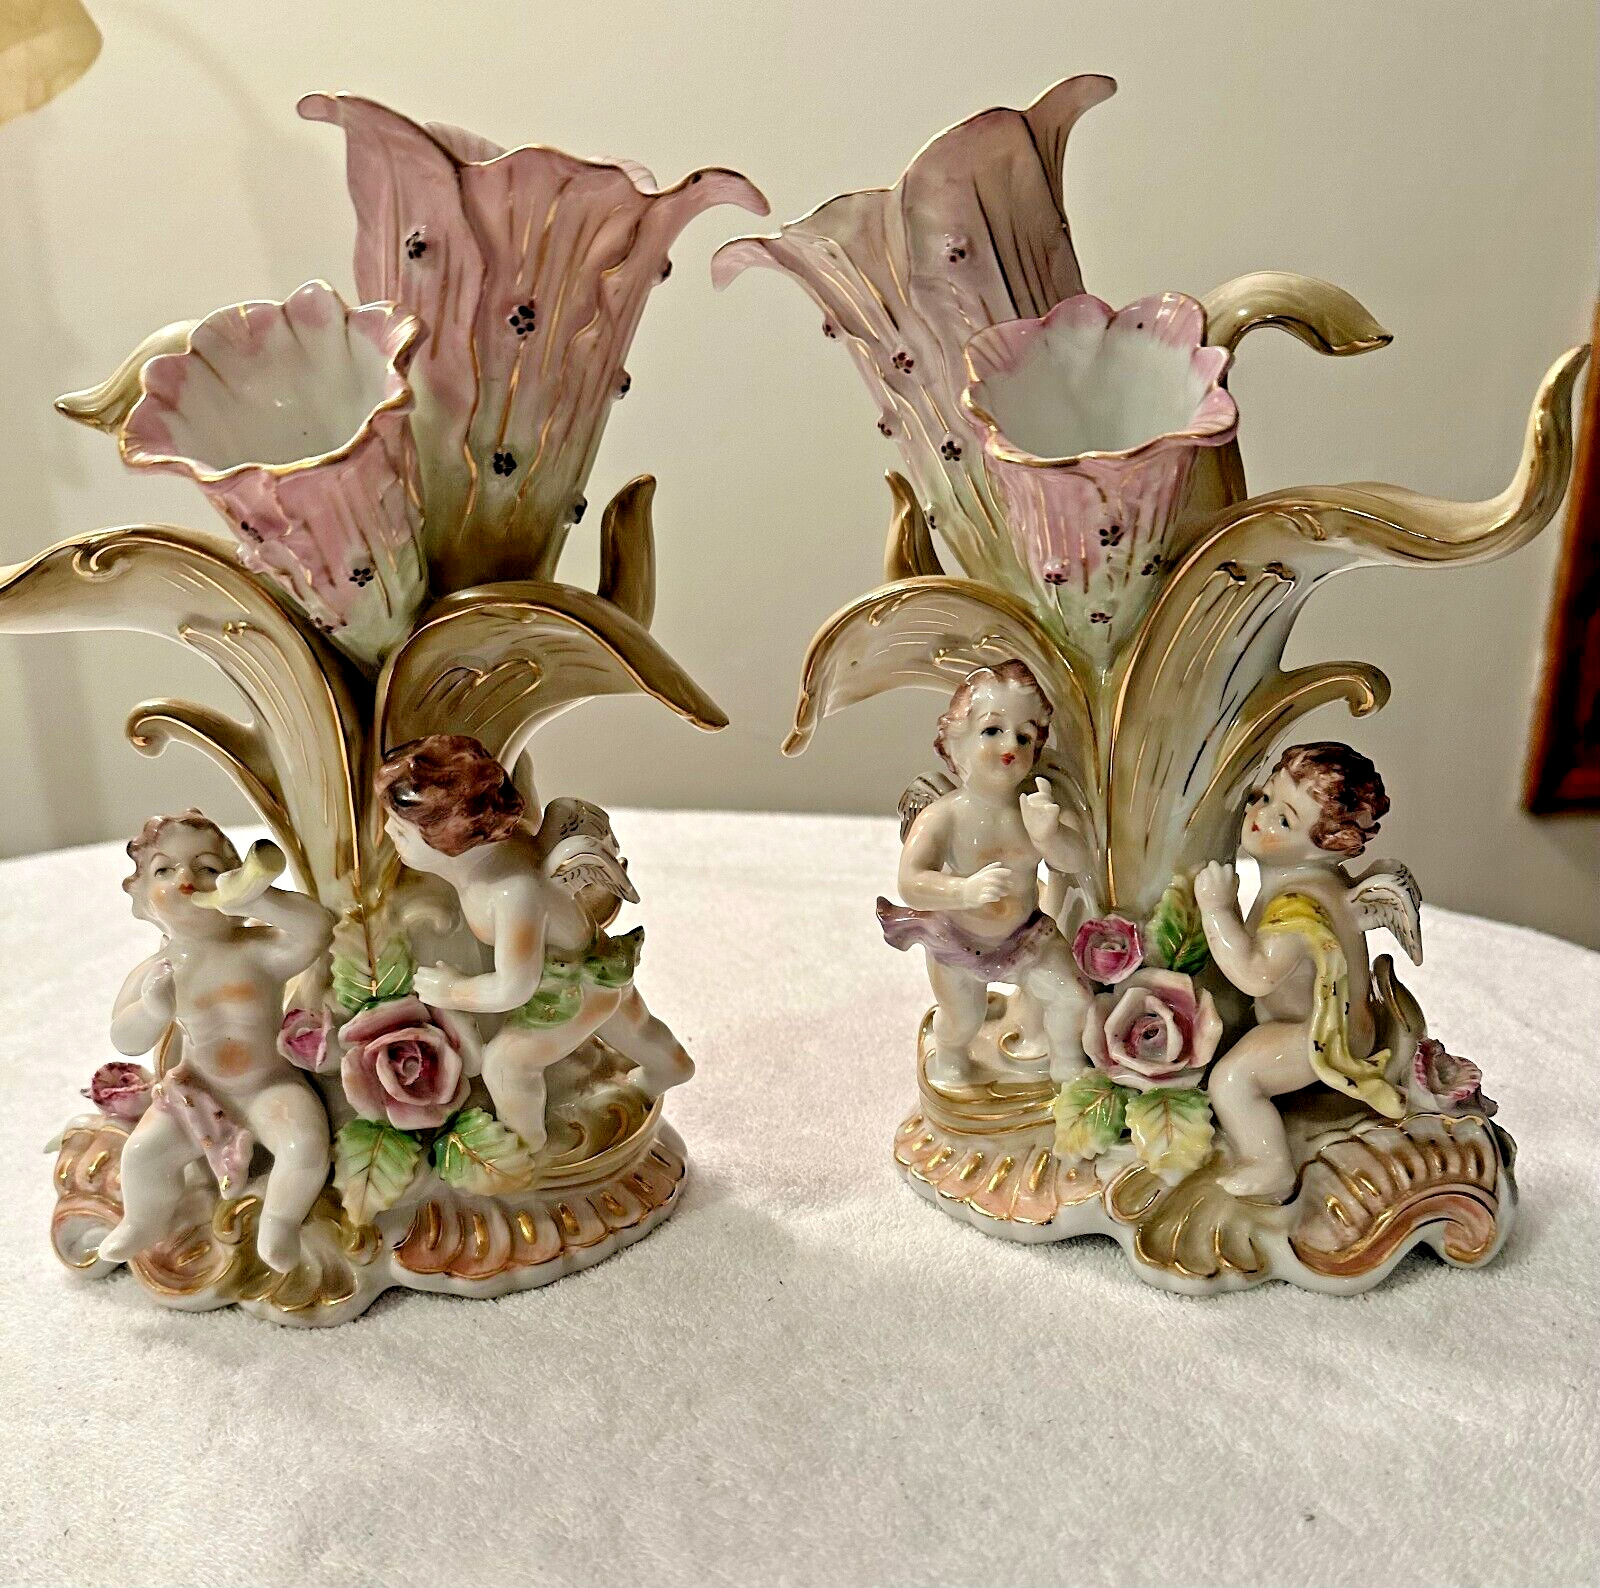 Vintage Ardalt Japan Handpainted Lenwile China Pair of Porcelain Vases # 6778